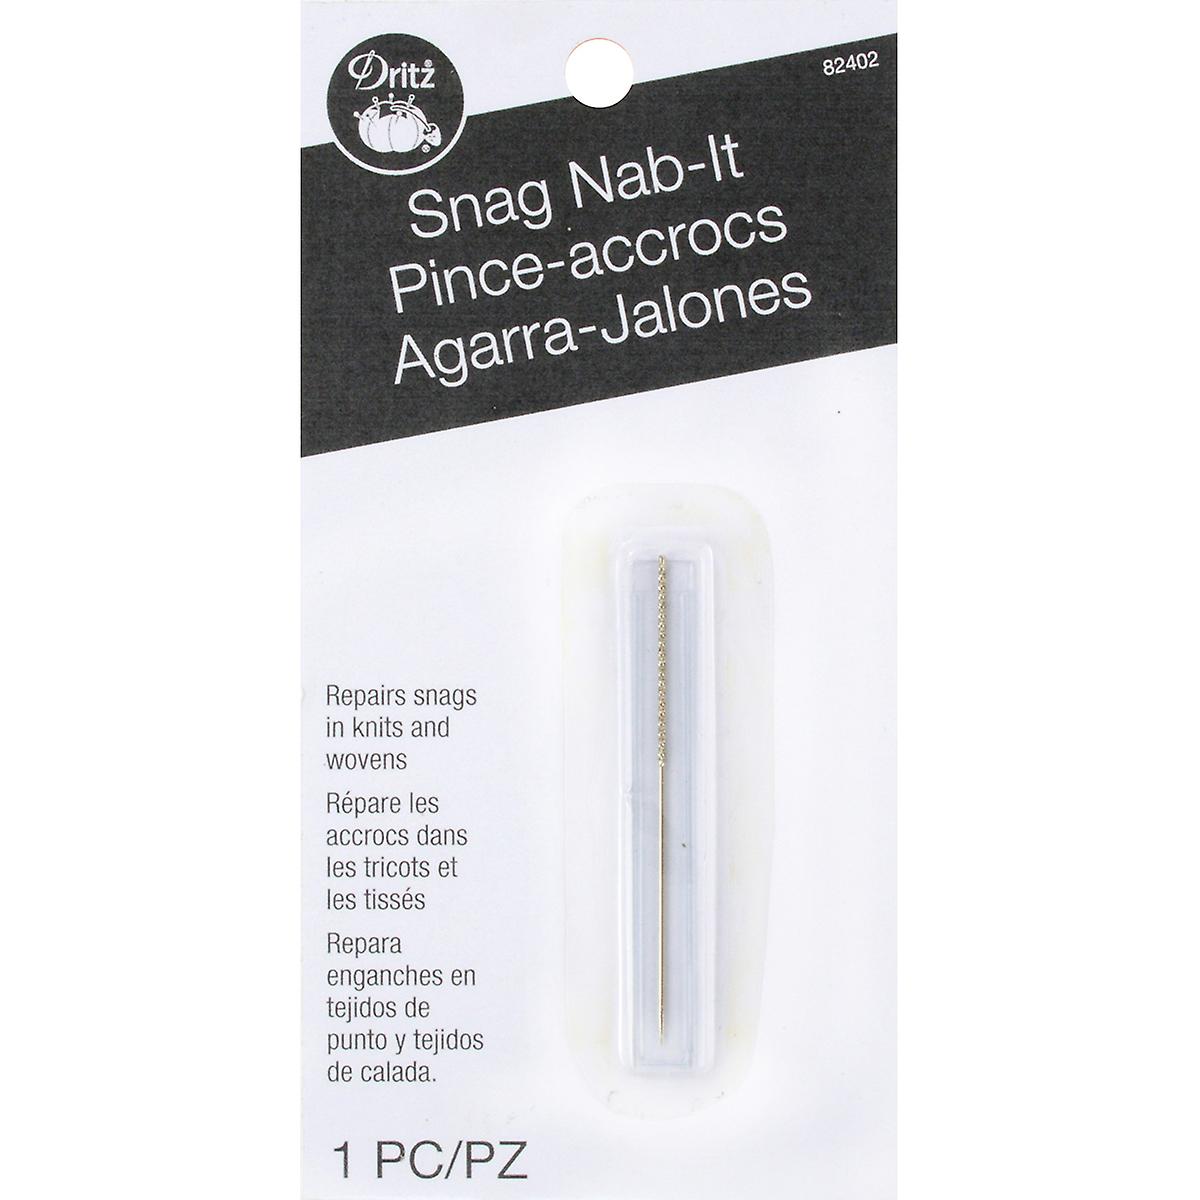 Dritz Snag Nab-It Tool #82402 Repairs Snags in Knits & Wovens 2 3/8" long